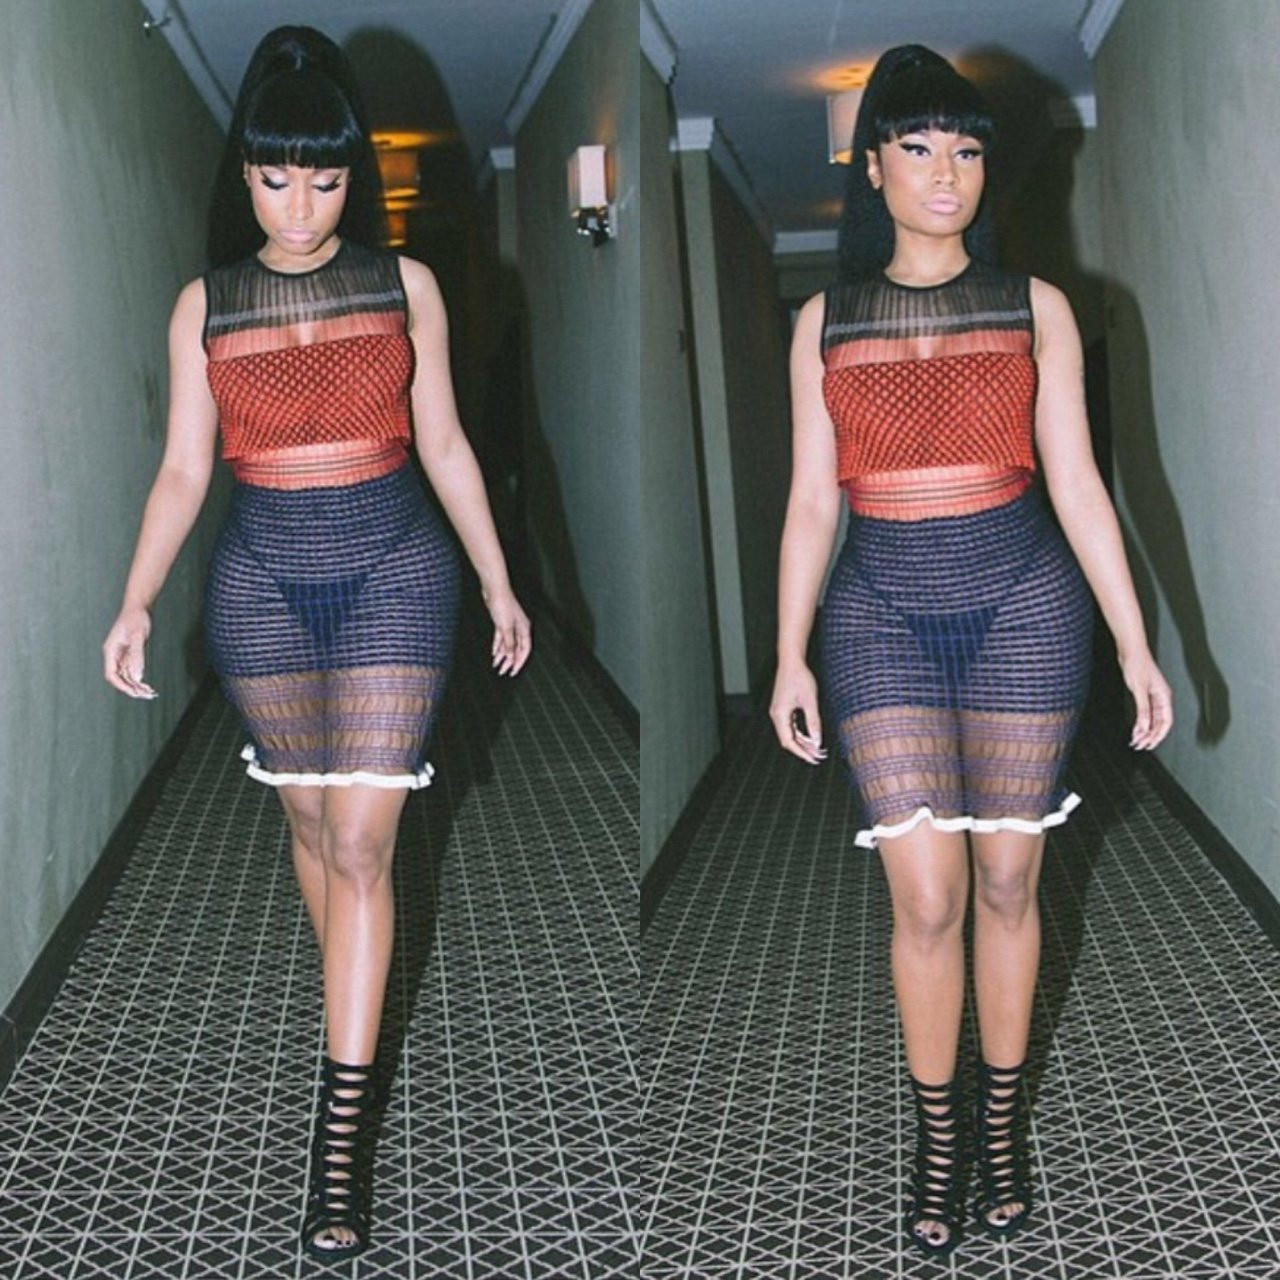 Nicki-Minaj-in-Transparent-Dress-01---TheFappening.nu0562b0e530c98bff.jpg